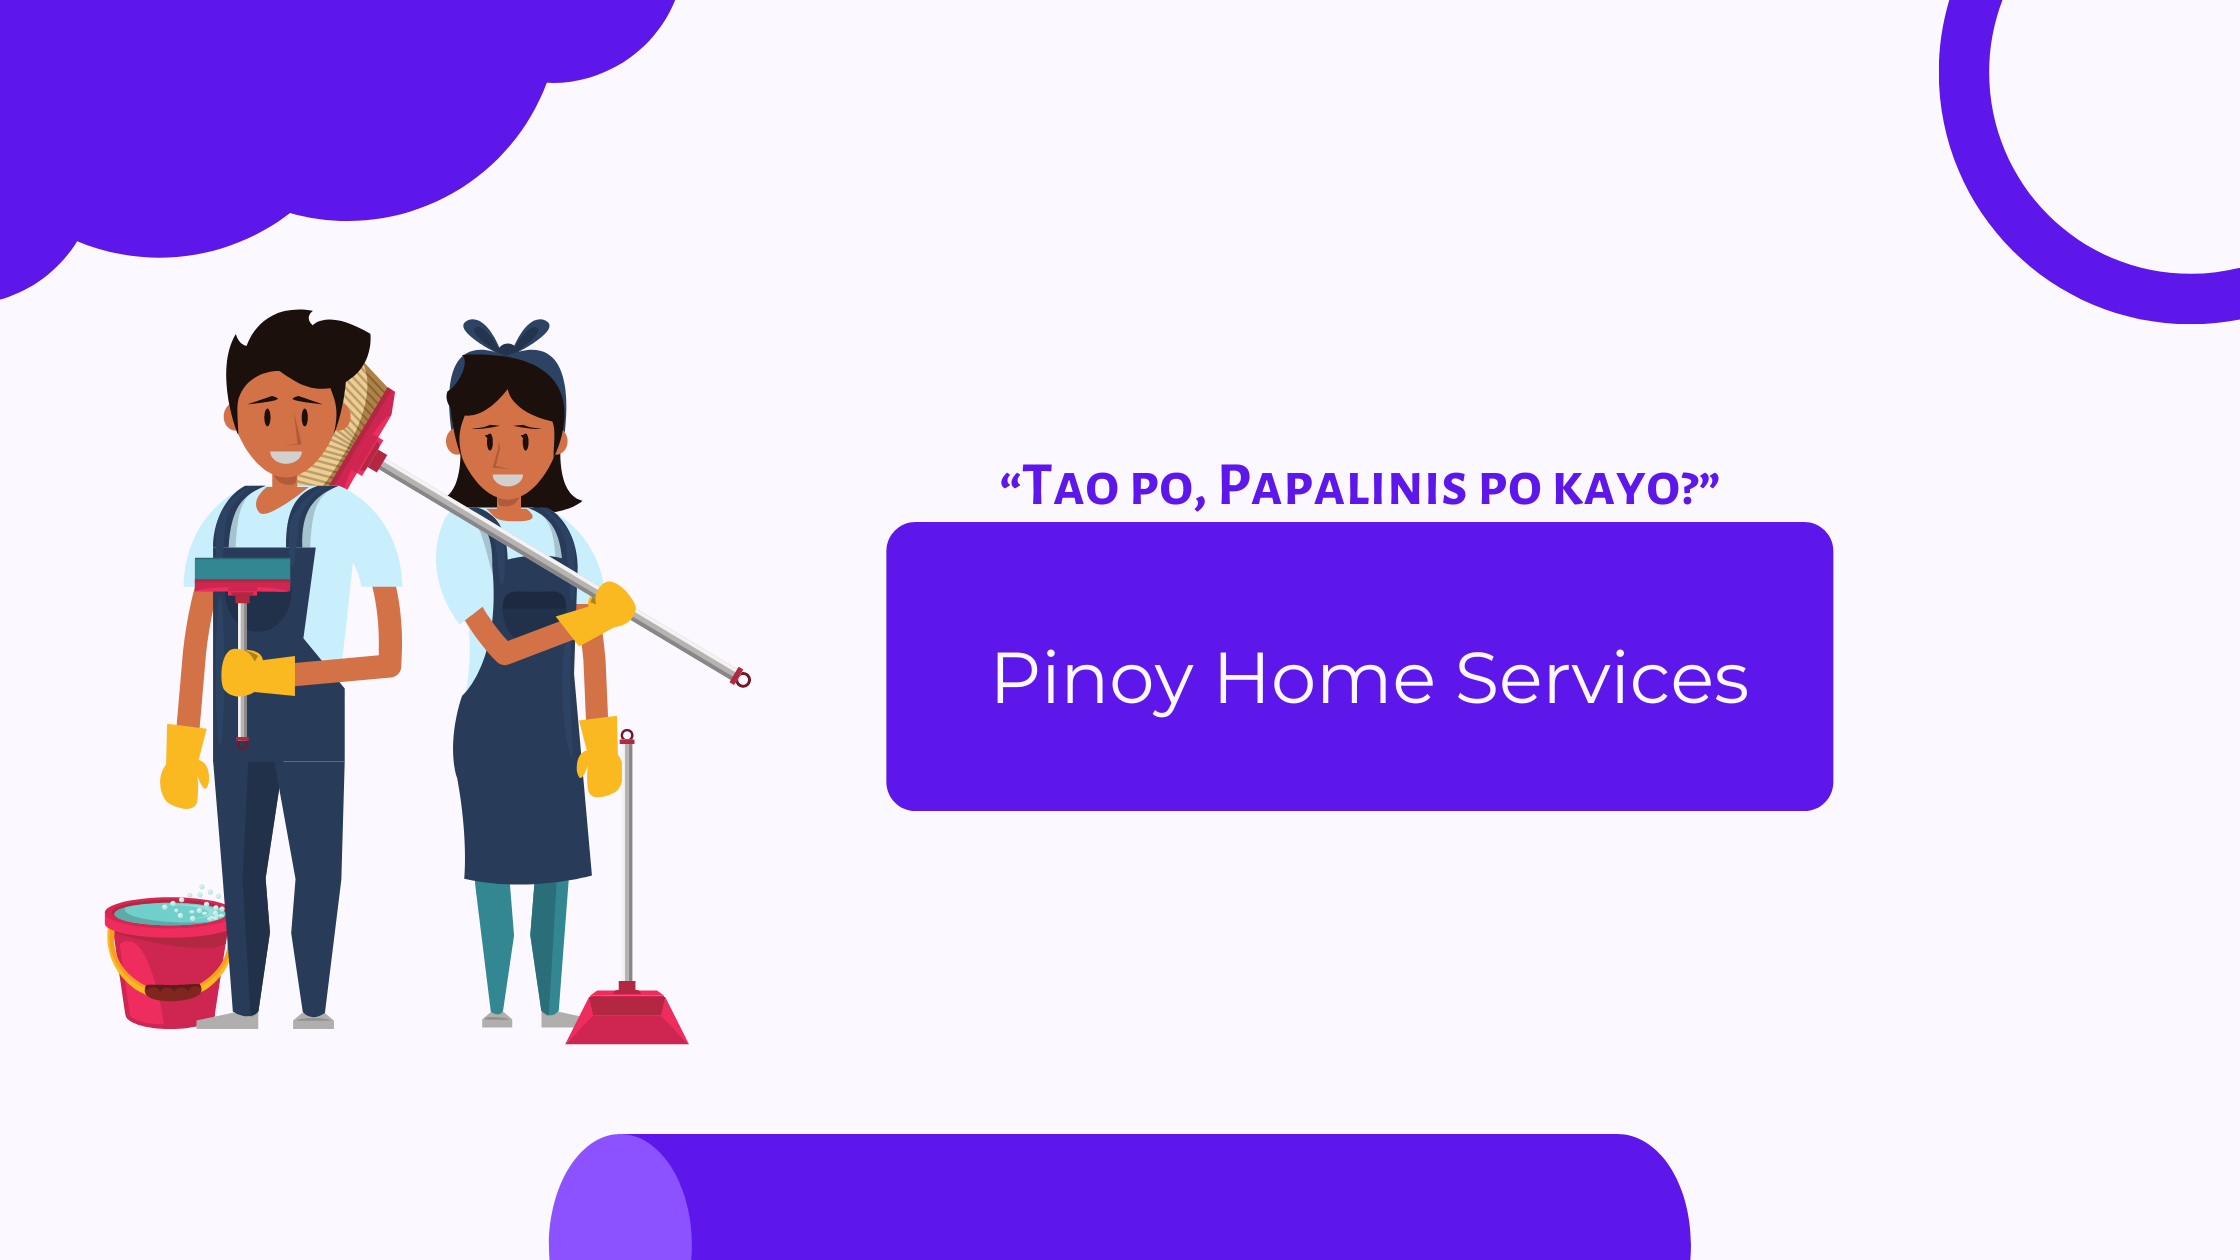 “Tao po, Papalinis po kayo?”: Pinoy Home Services